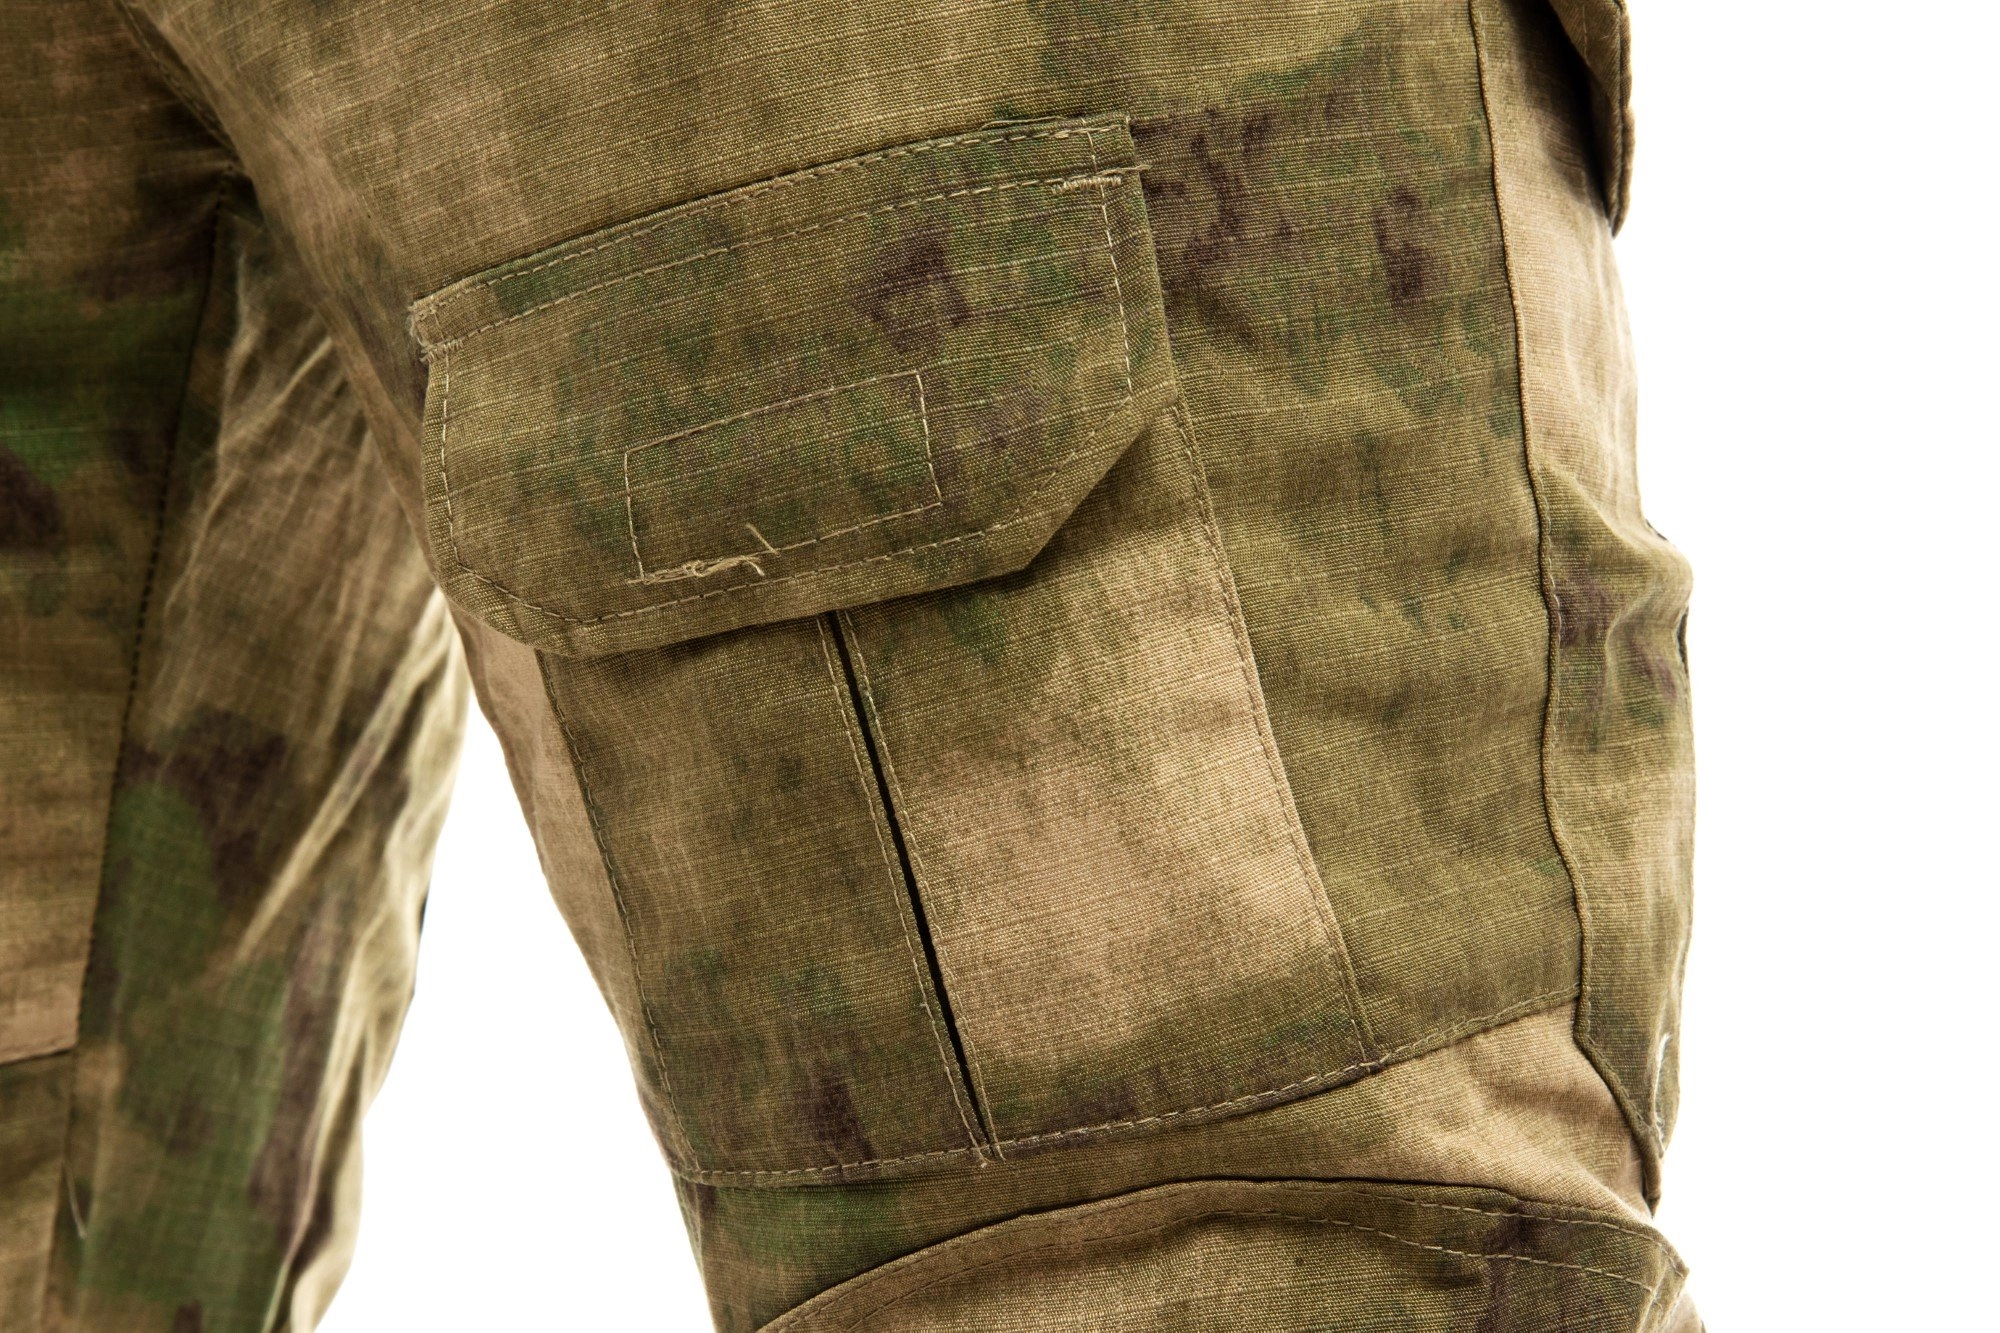 Combat Uniform Set - ATC FG